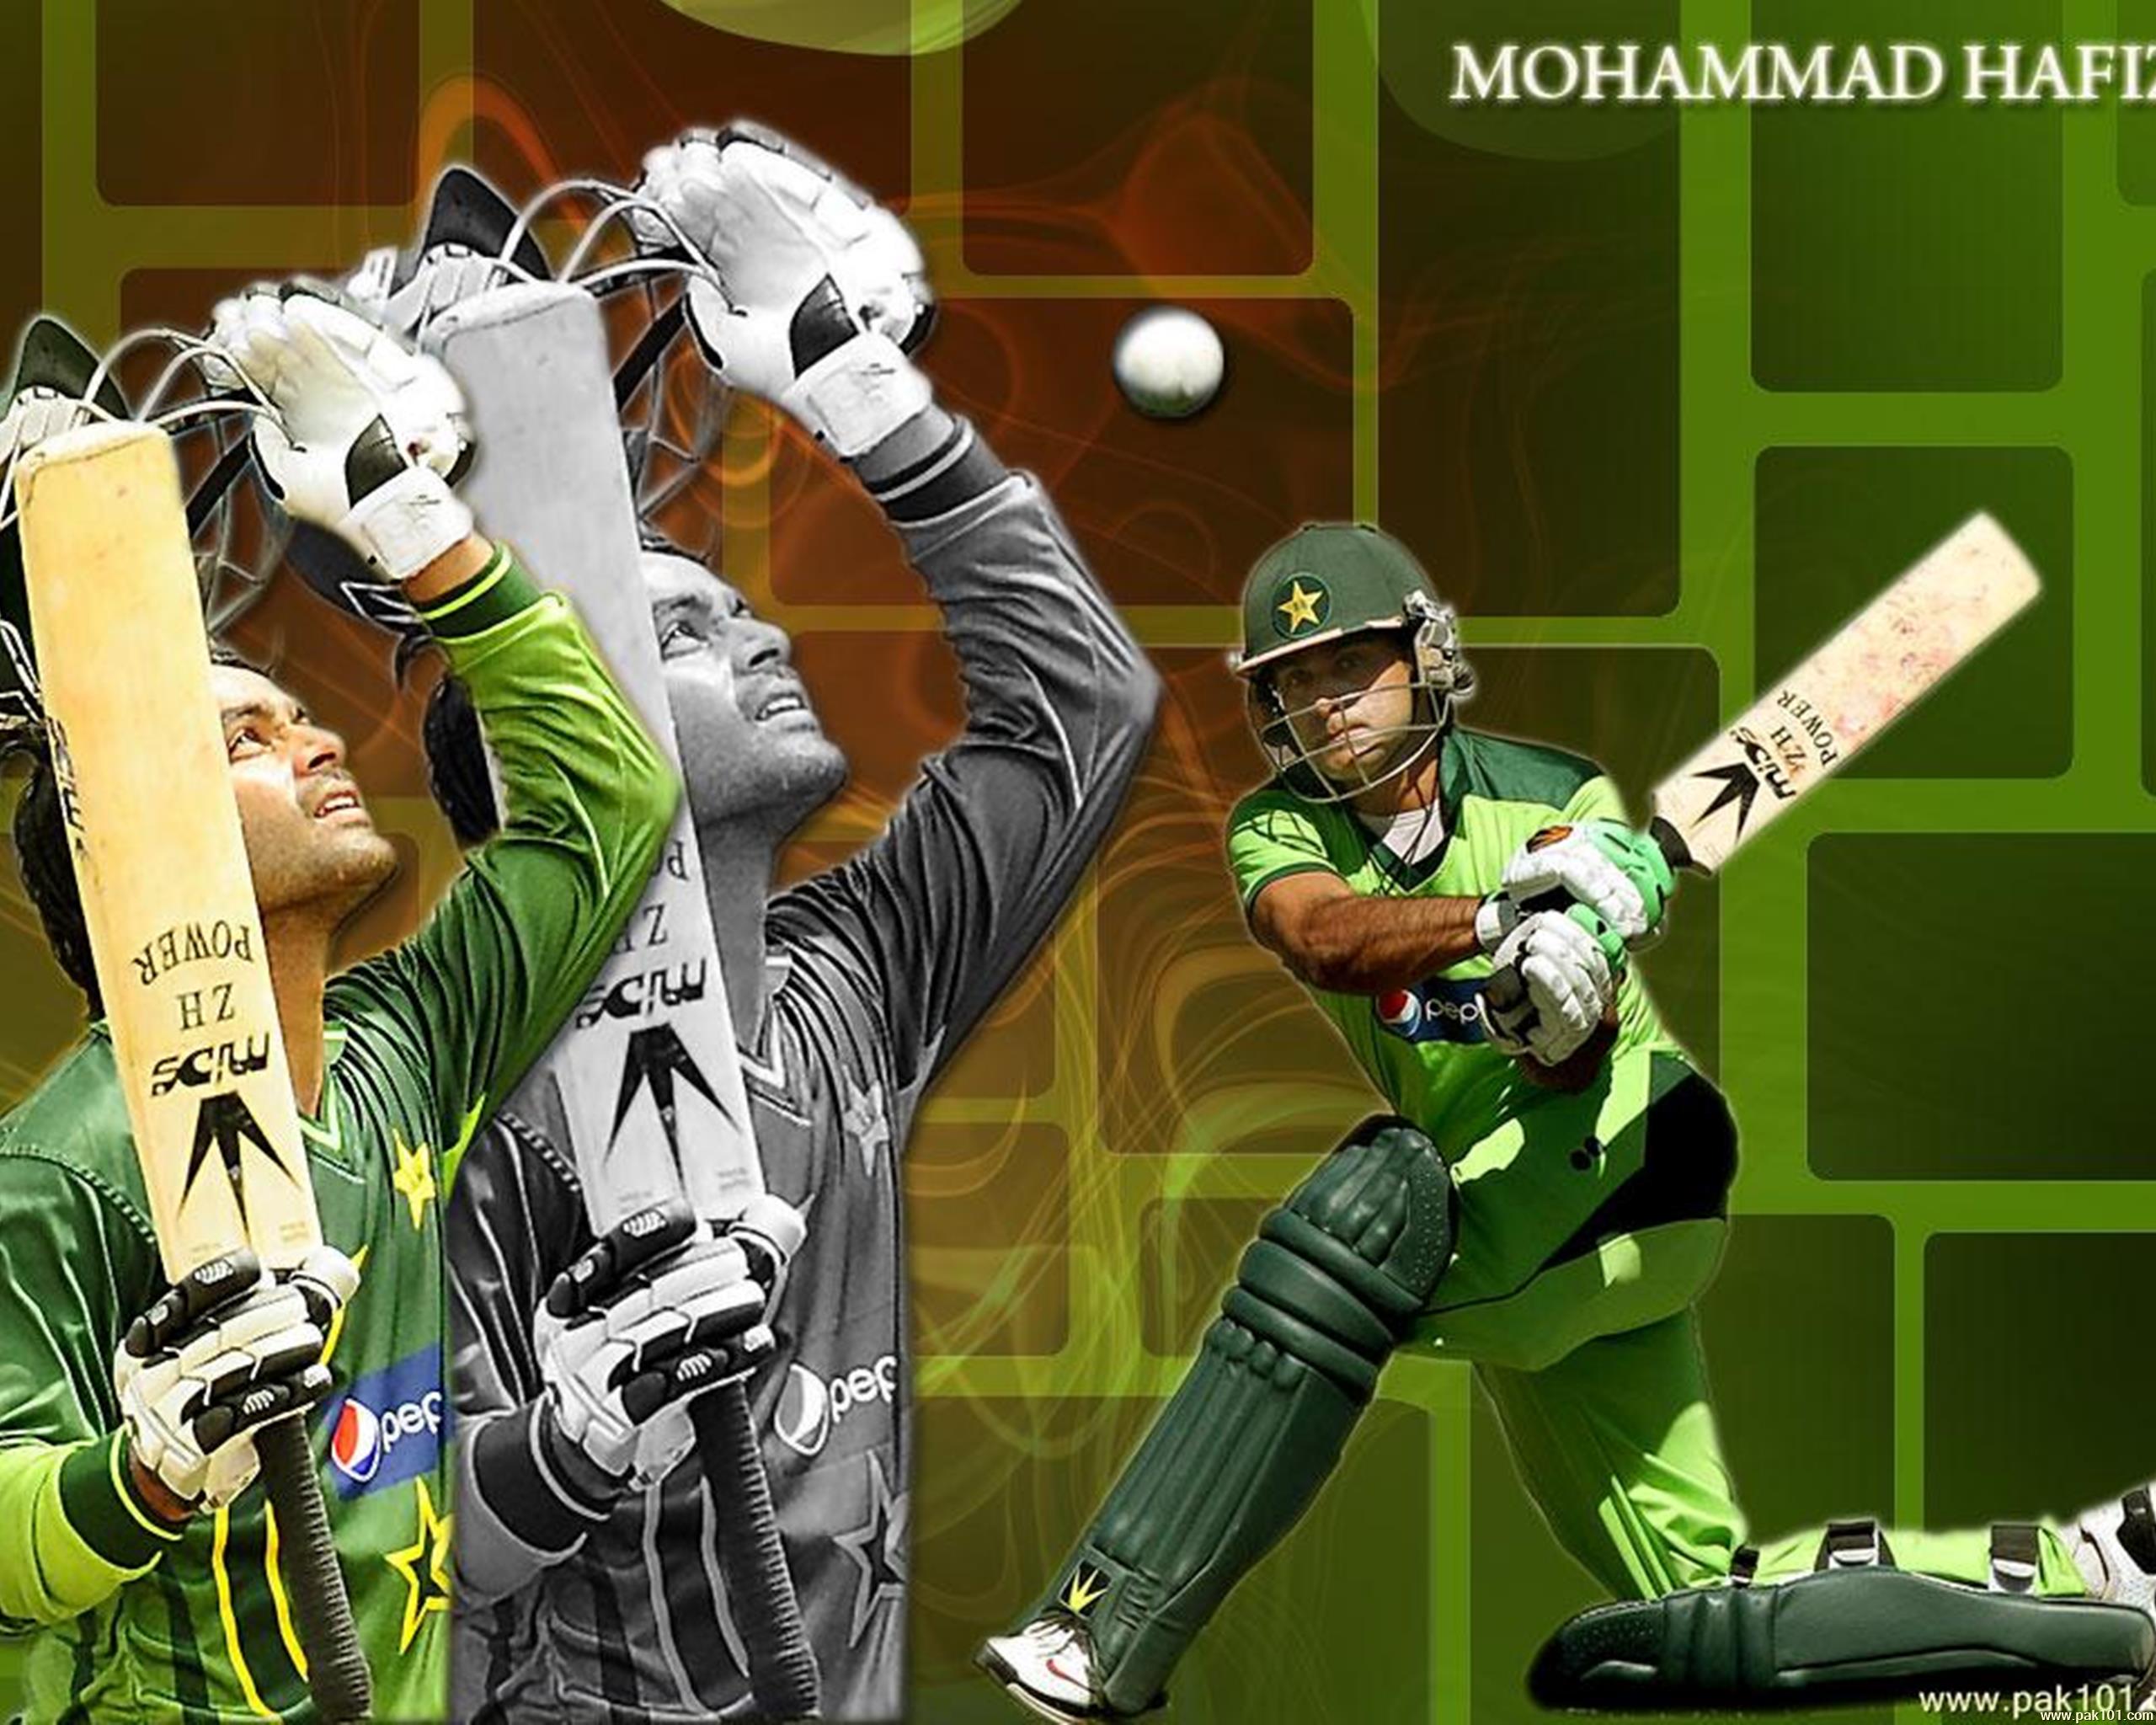 Wallpapers Cricketers Mohammad Hafeez Mohammad Hafeez high